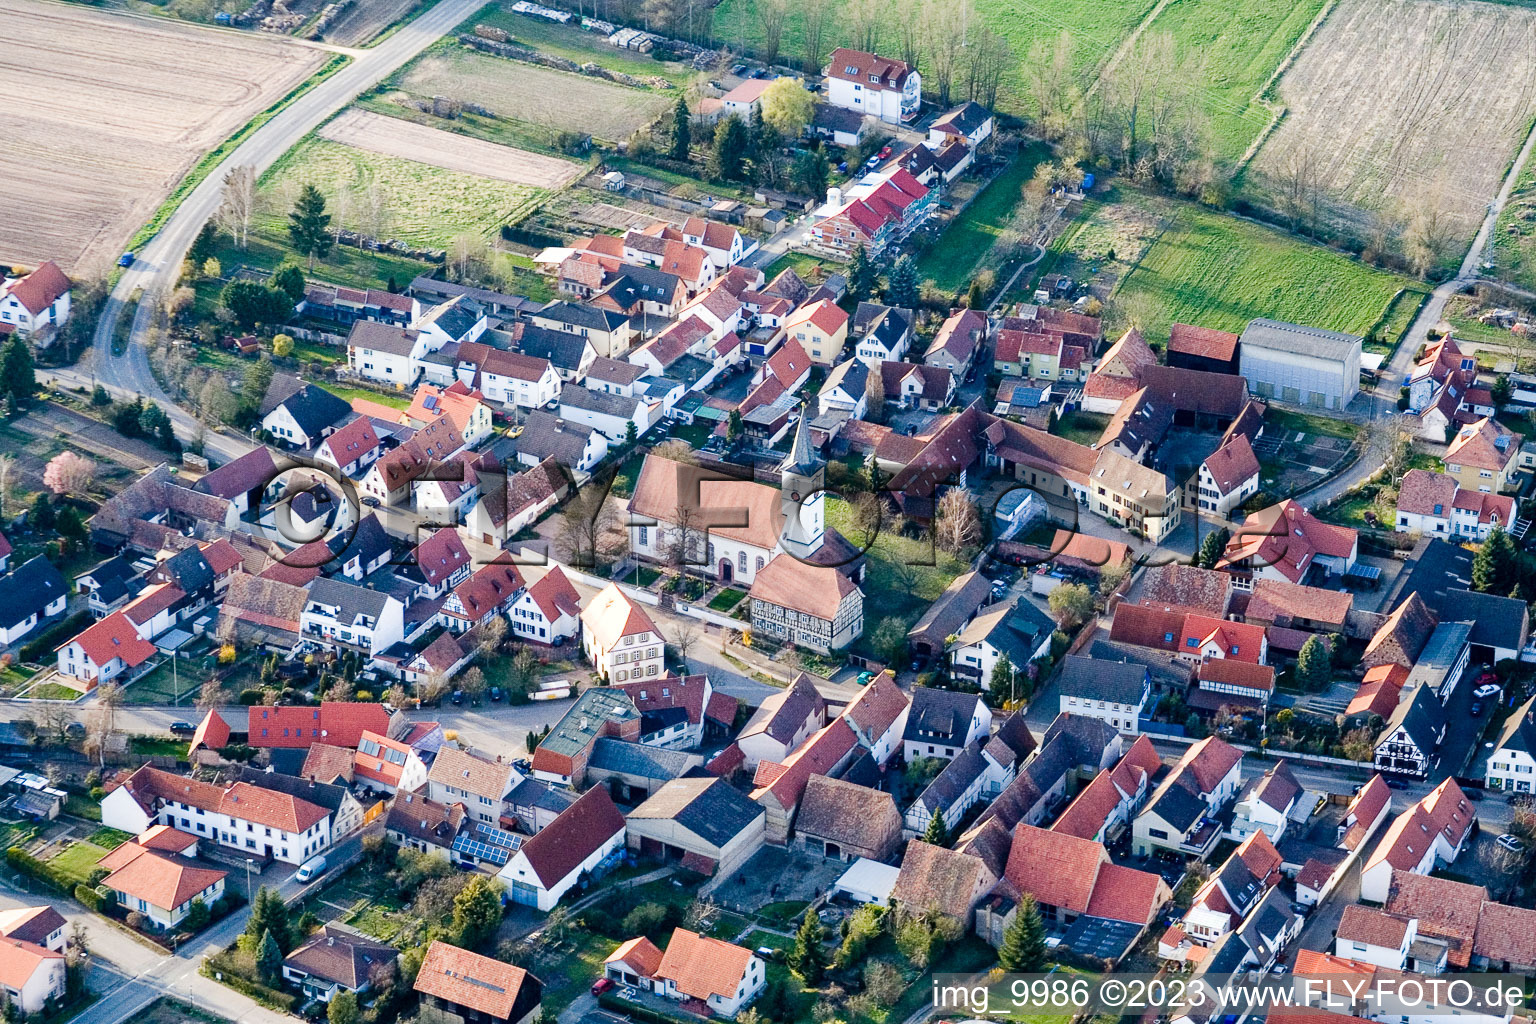 Schwegenheim dans le département Rhénanie-Palatinat, Allemagne vu d'un drone